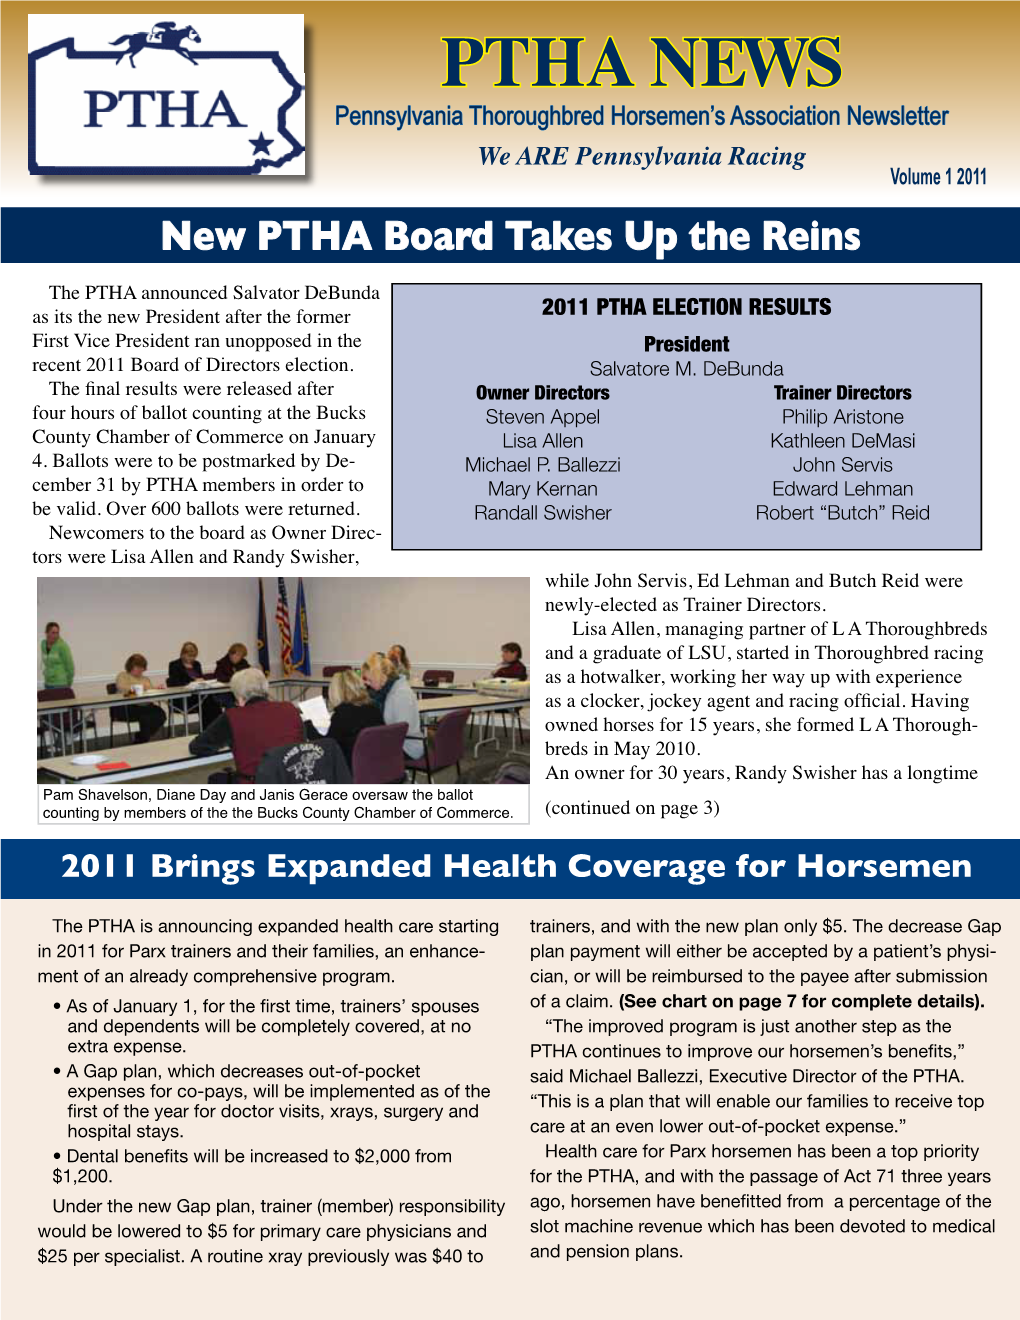 PTHA News 2011